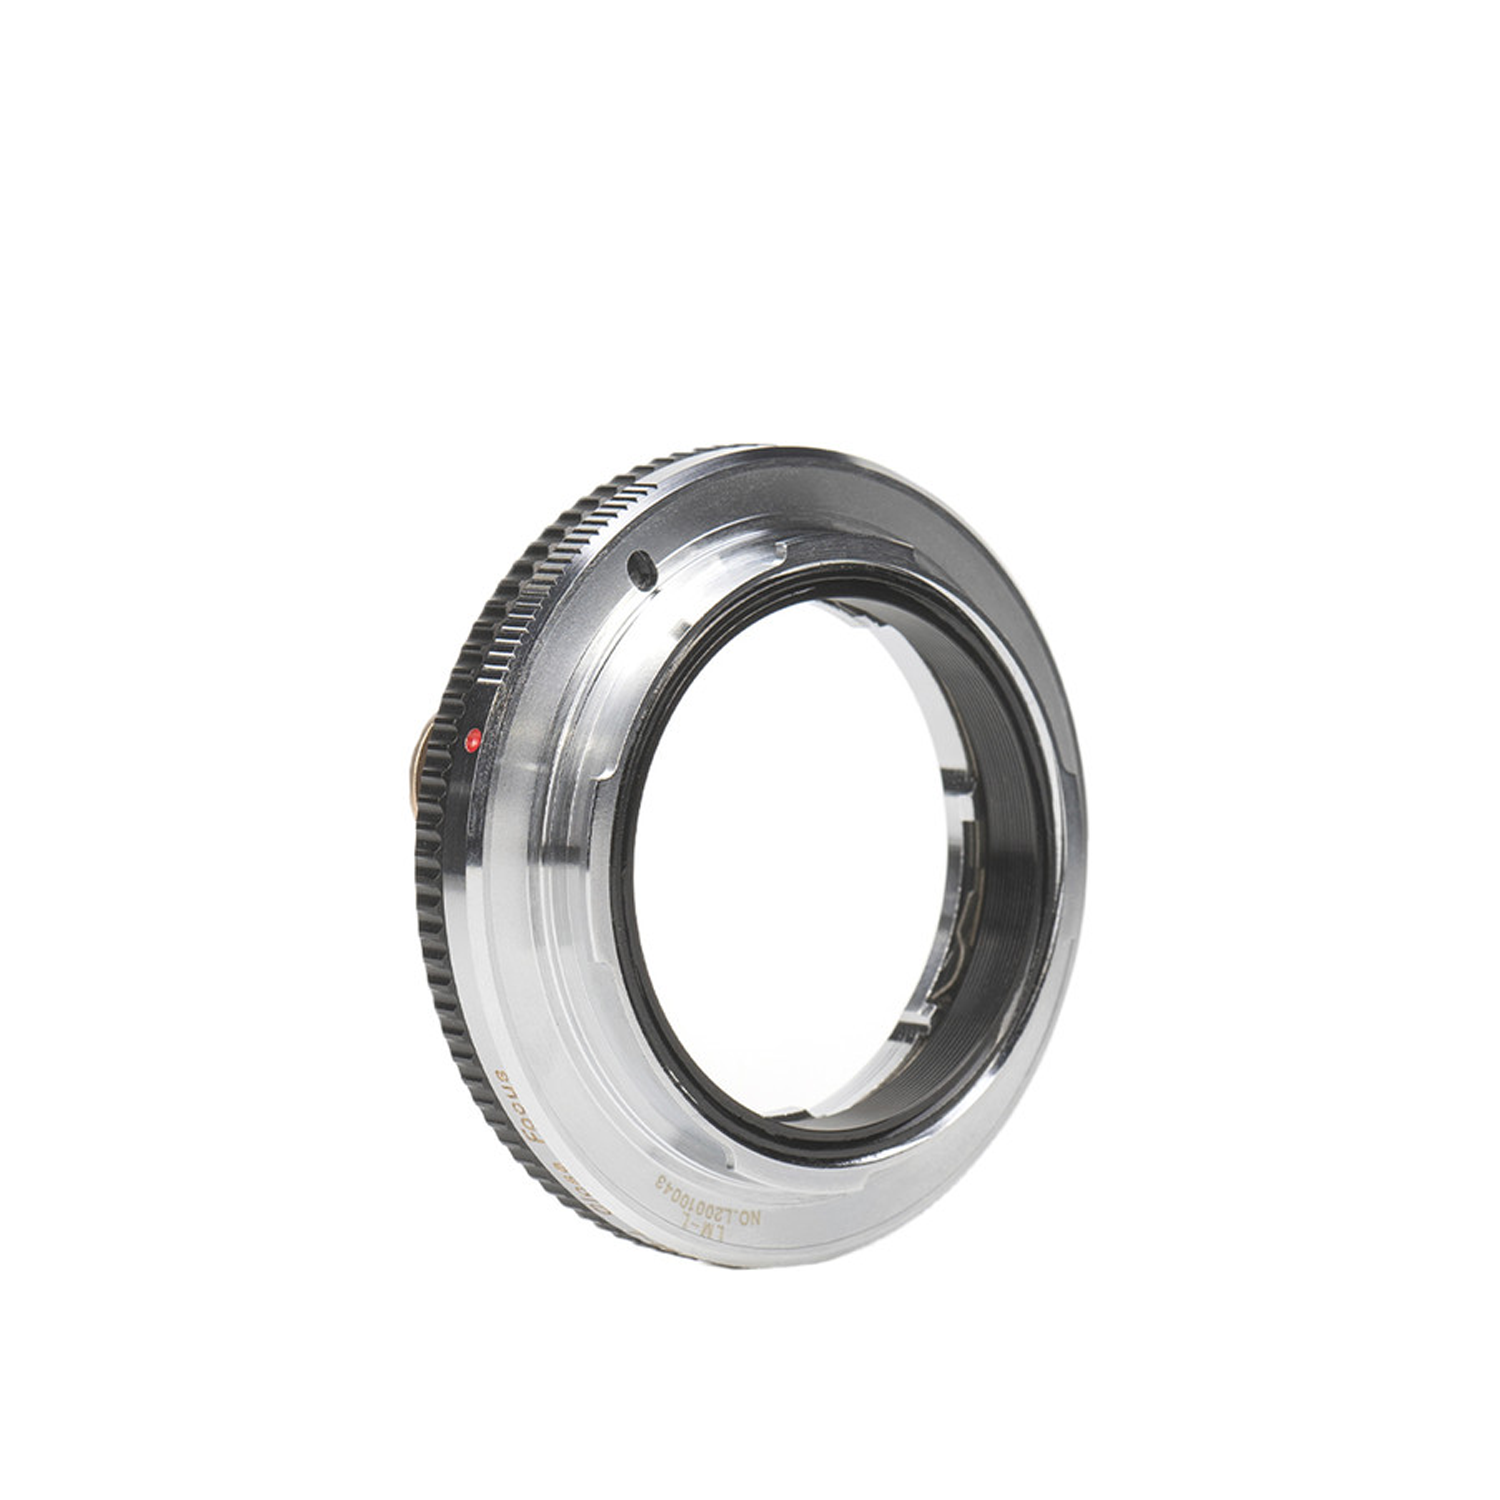 7artisans Photoelectric Close Focus Adapter for Leica M Lens to Leica L Camera